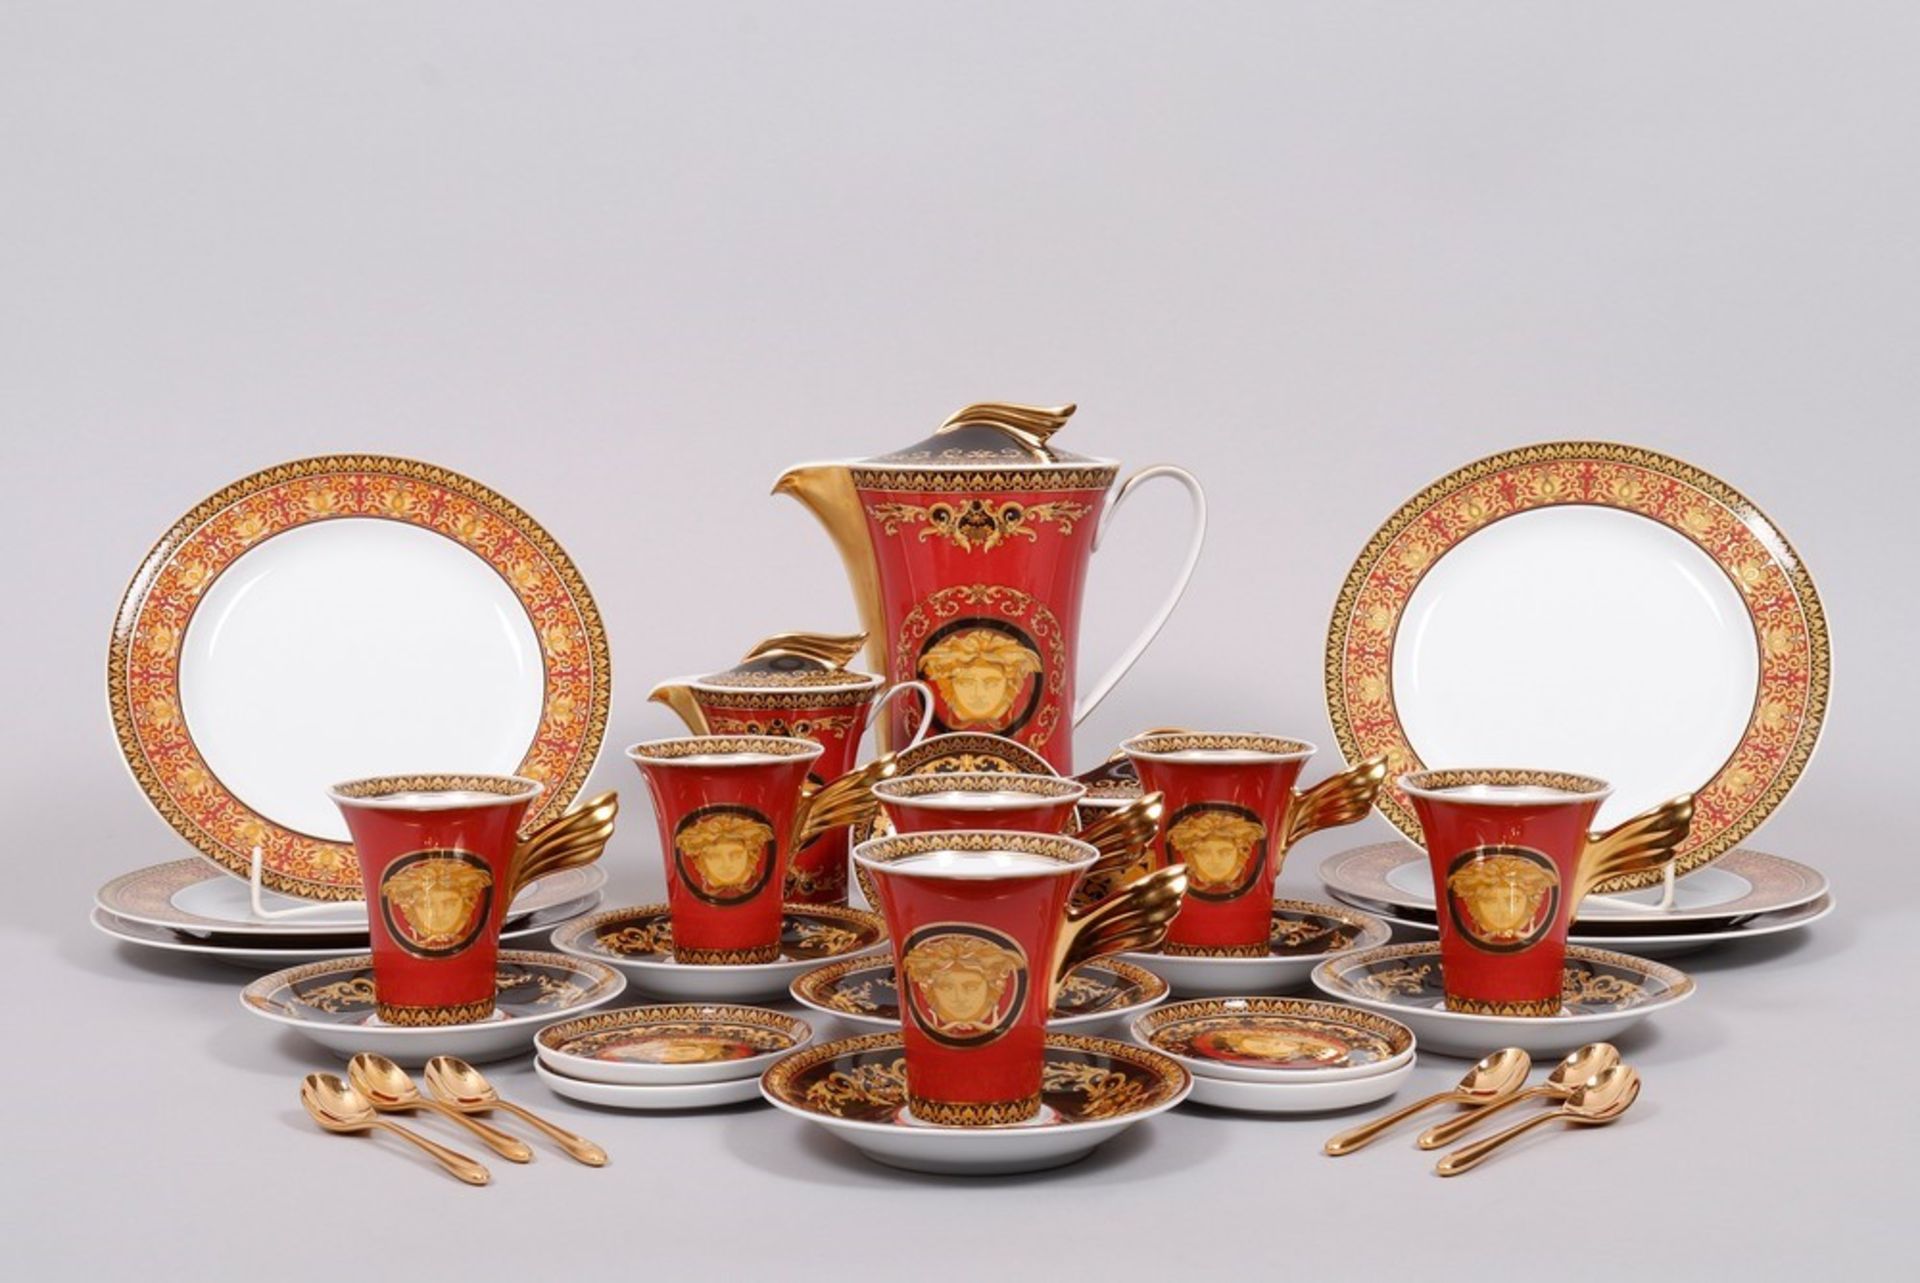 "Medusa" coffee service, Rosenthal meets Versace, "Mythos" form design Paul Wunderlich, "Medusa red